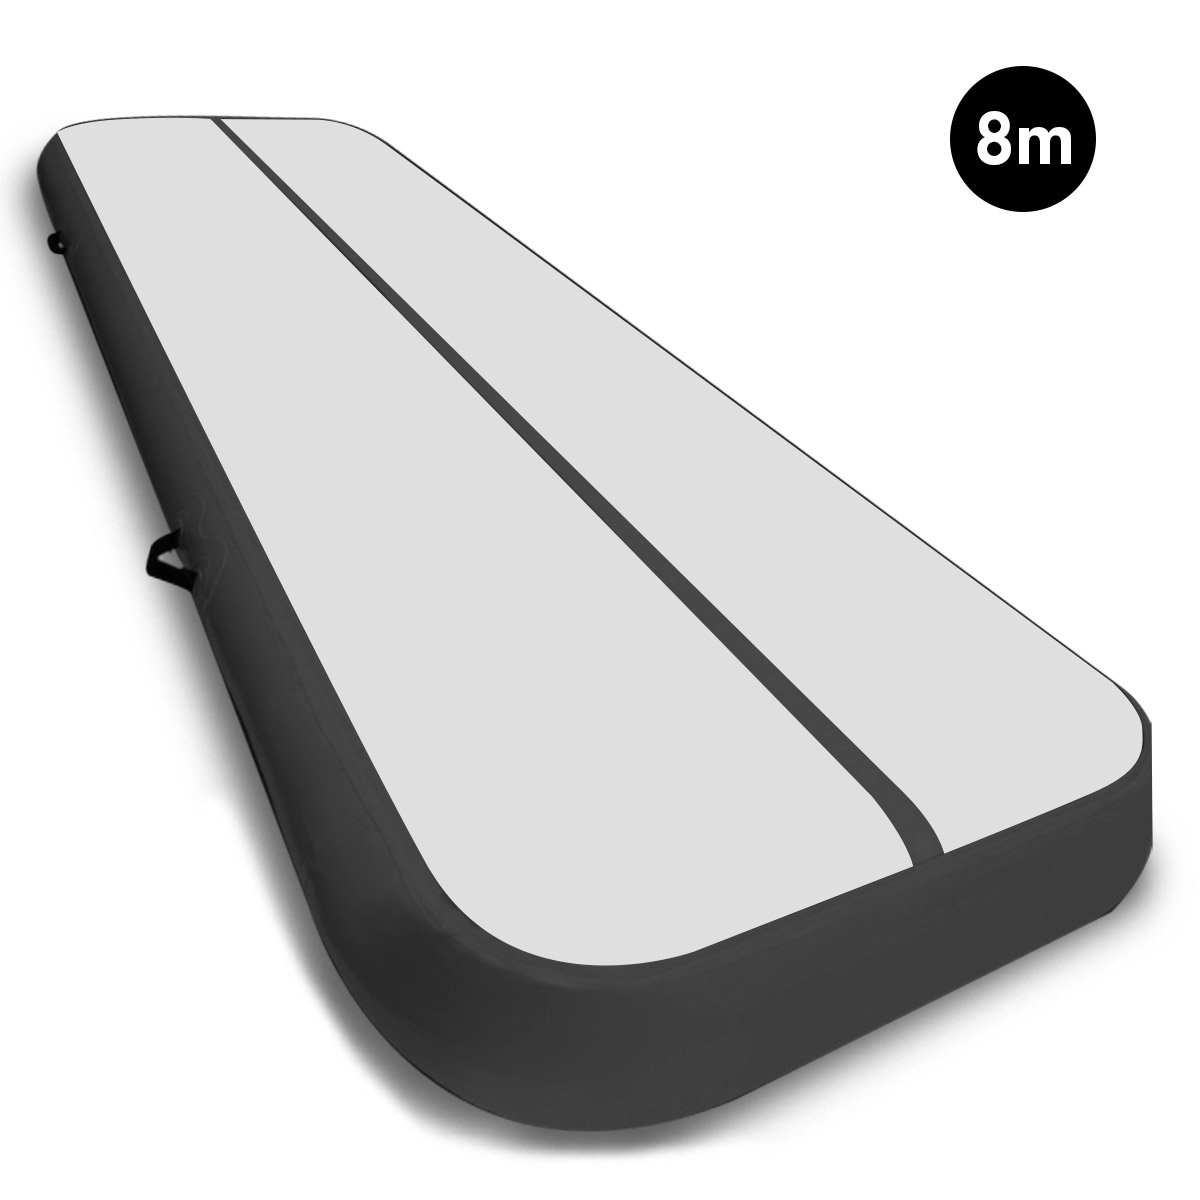 8m x 1m Air Track Inflatable Tumbling Mat Gymnastics - Grey Black 2